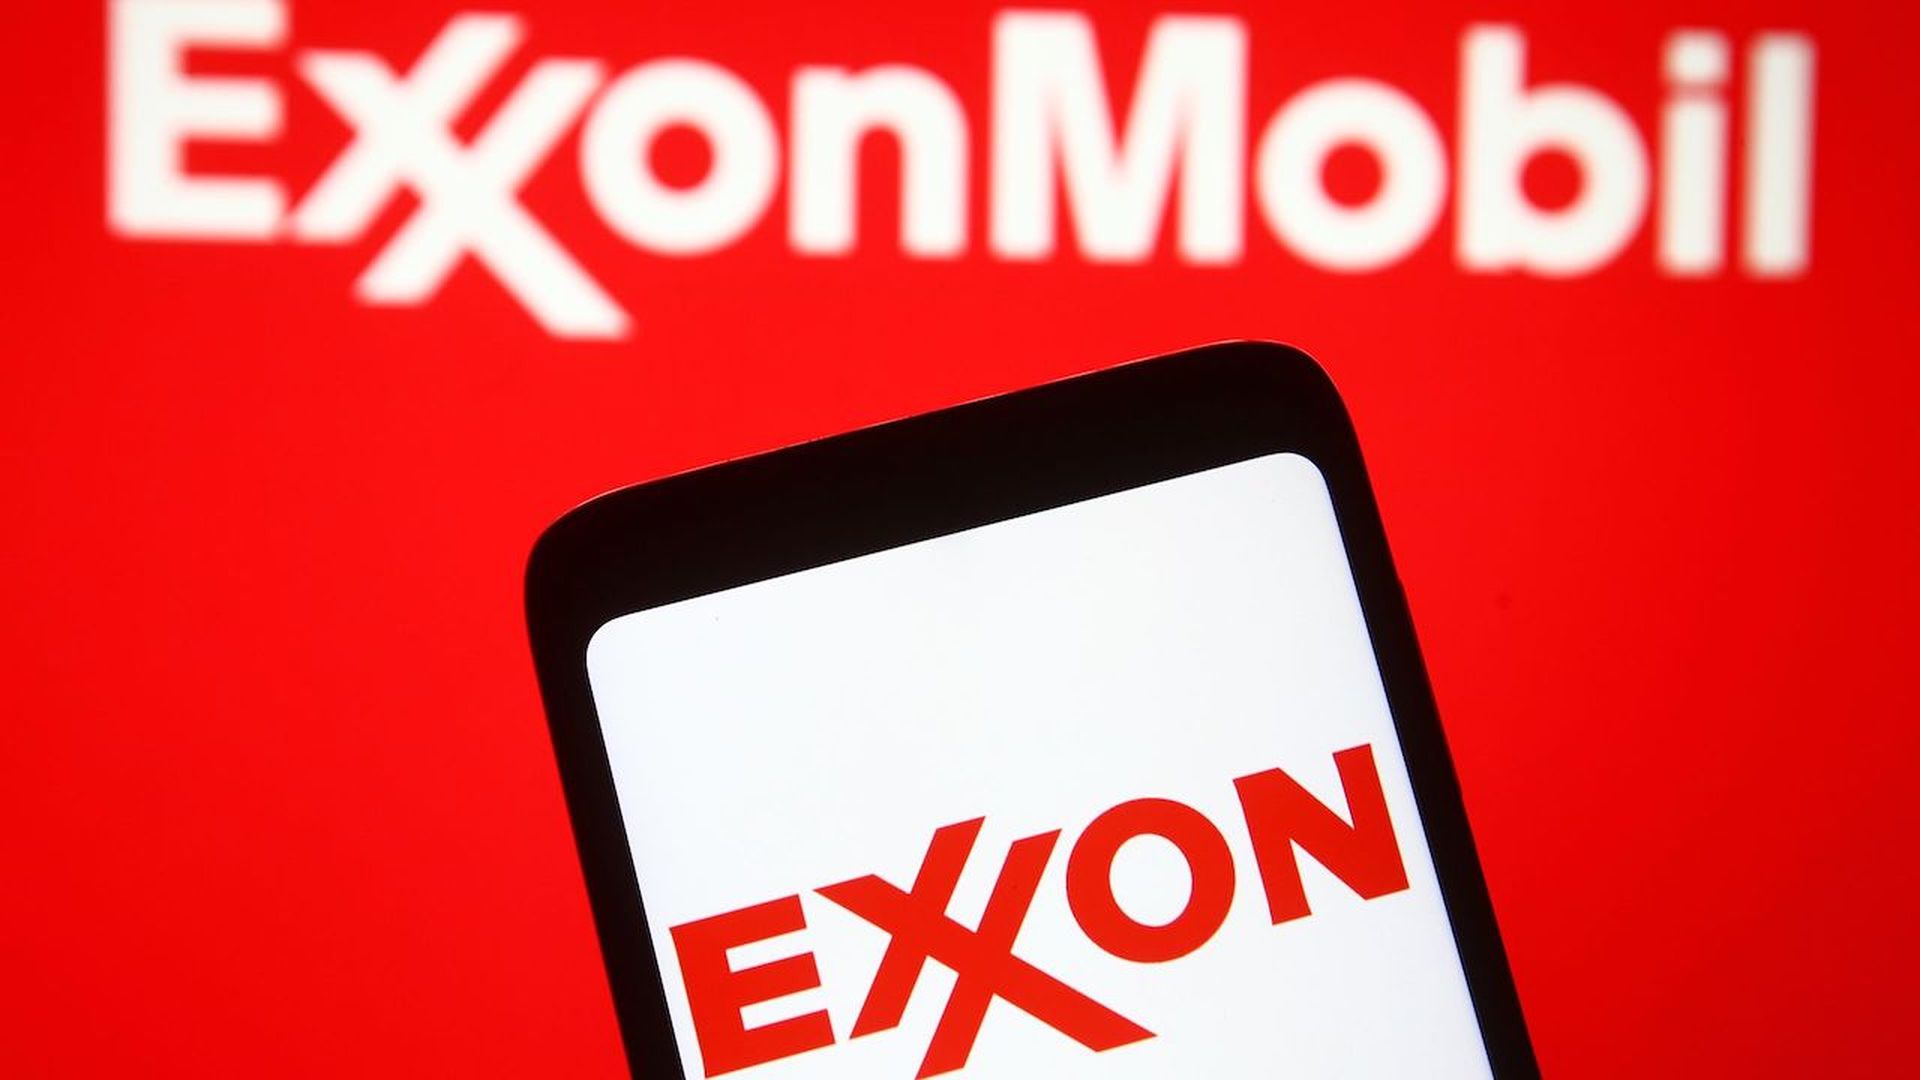 Image of Exxon's logo